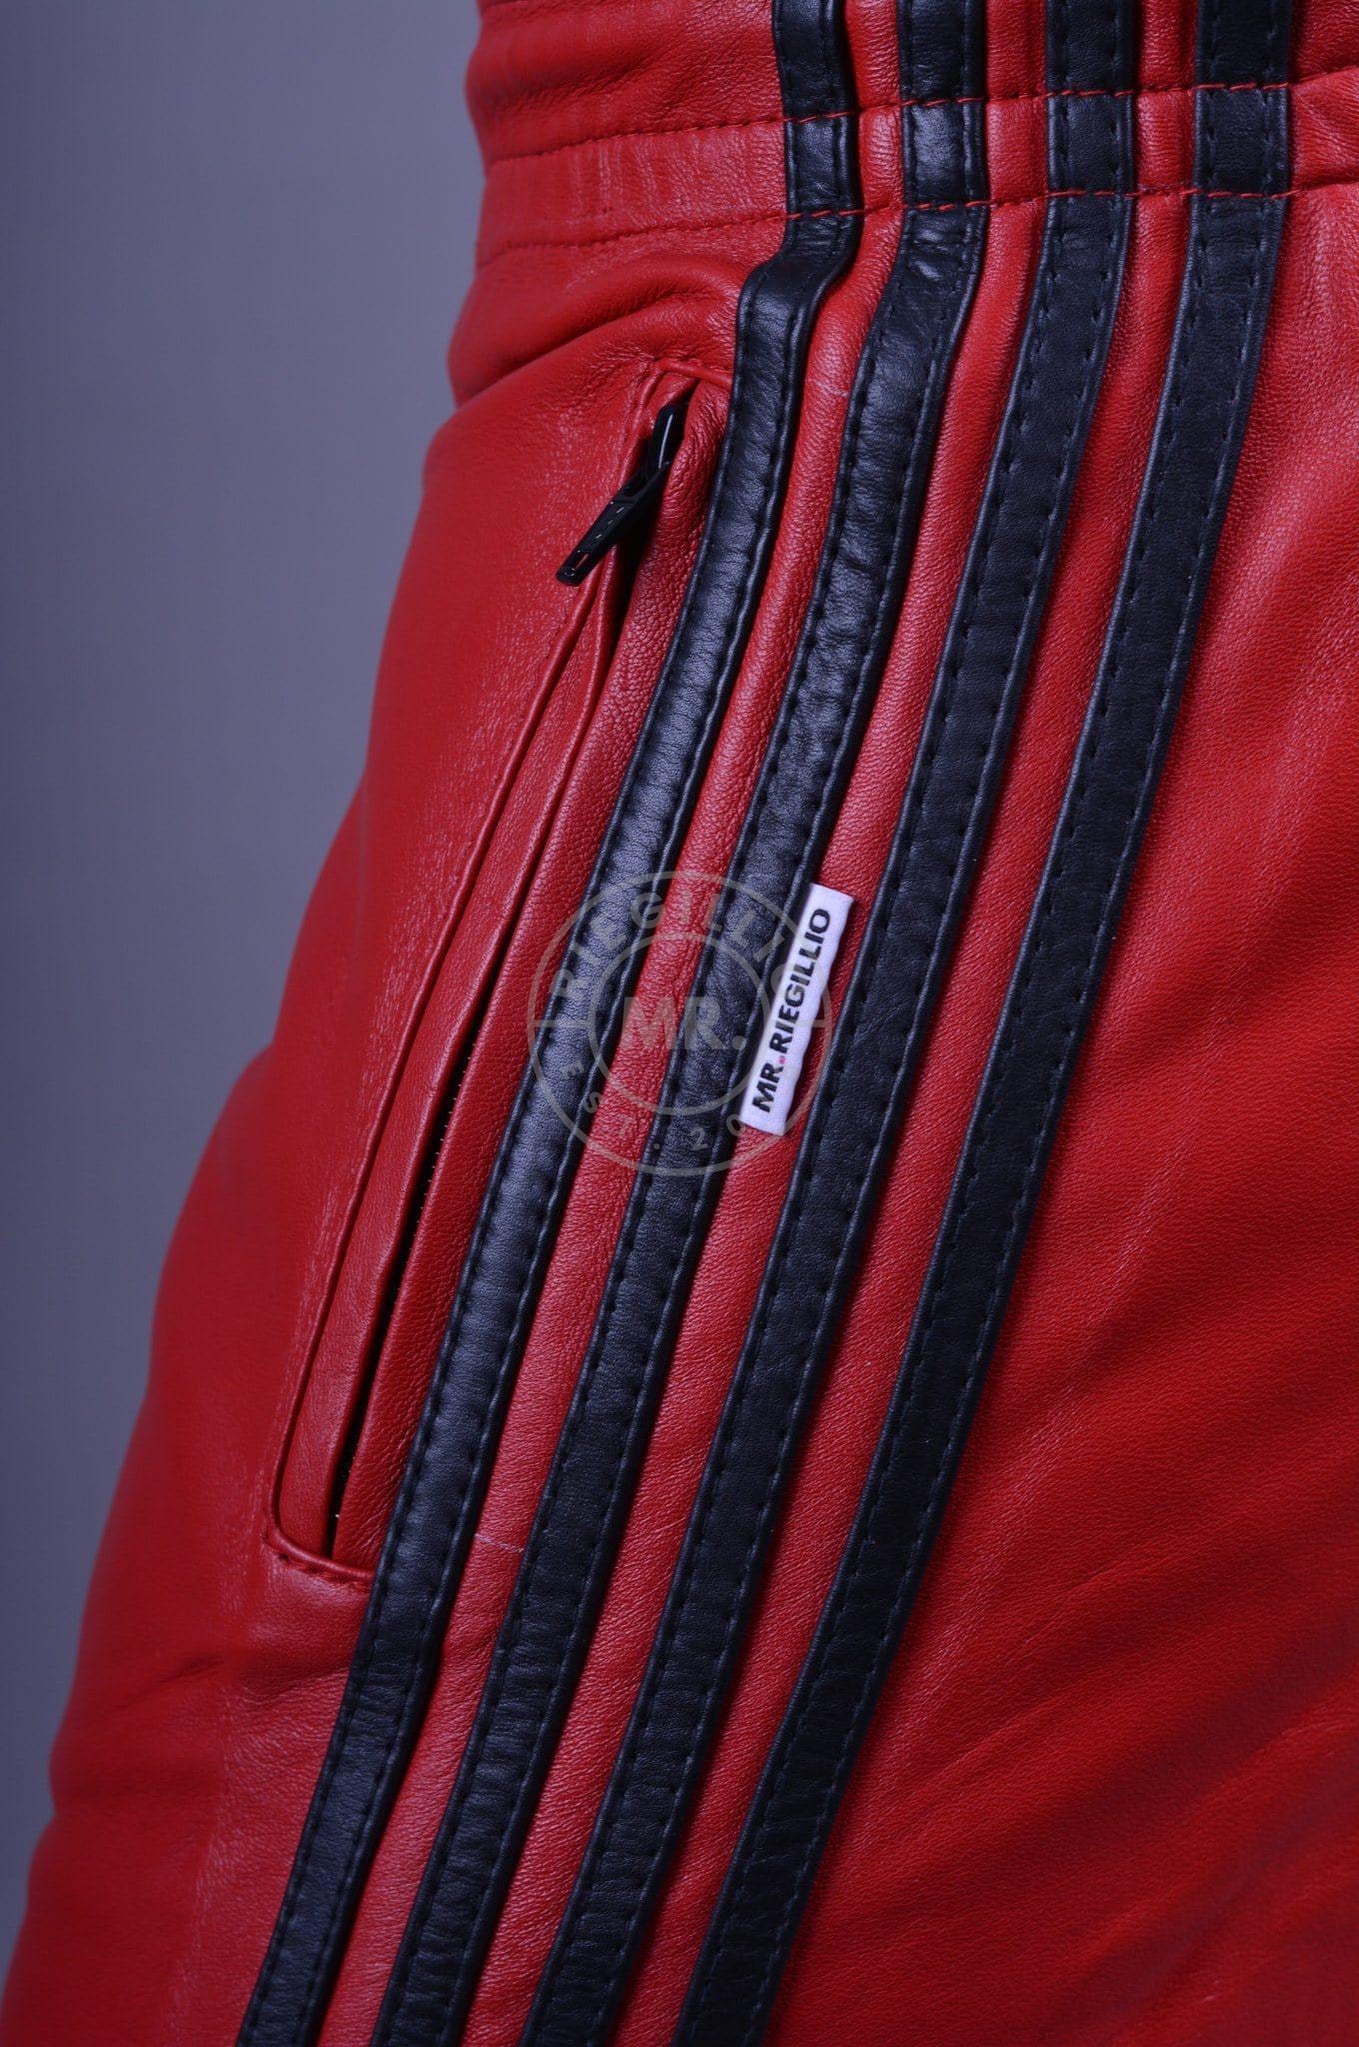 Red Leather Pants - BLACK STRIPES at MR. Riegillio